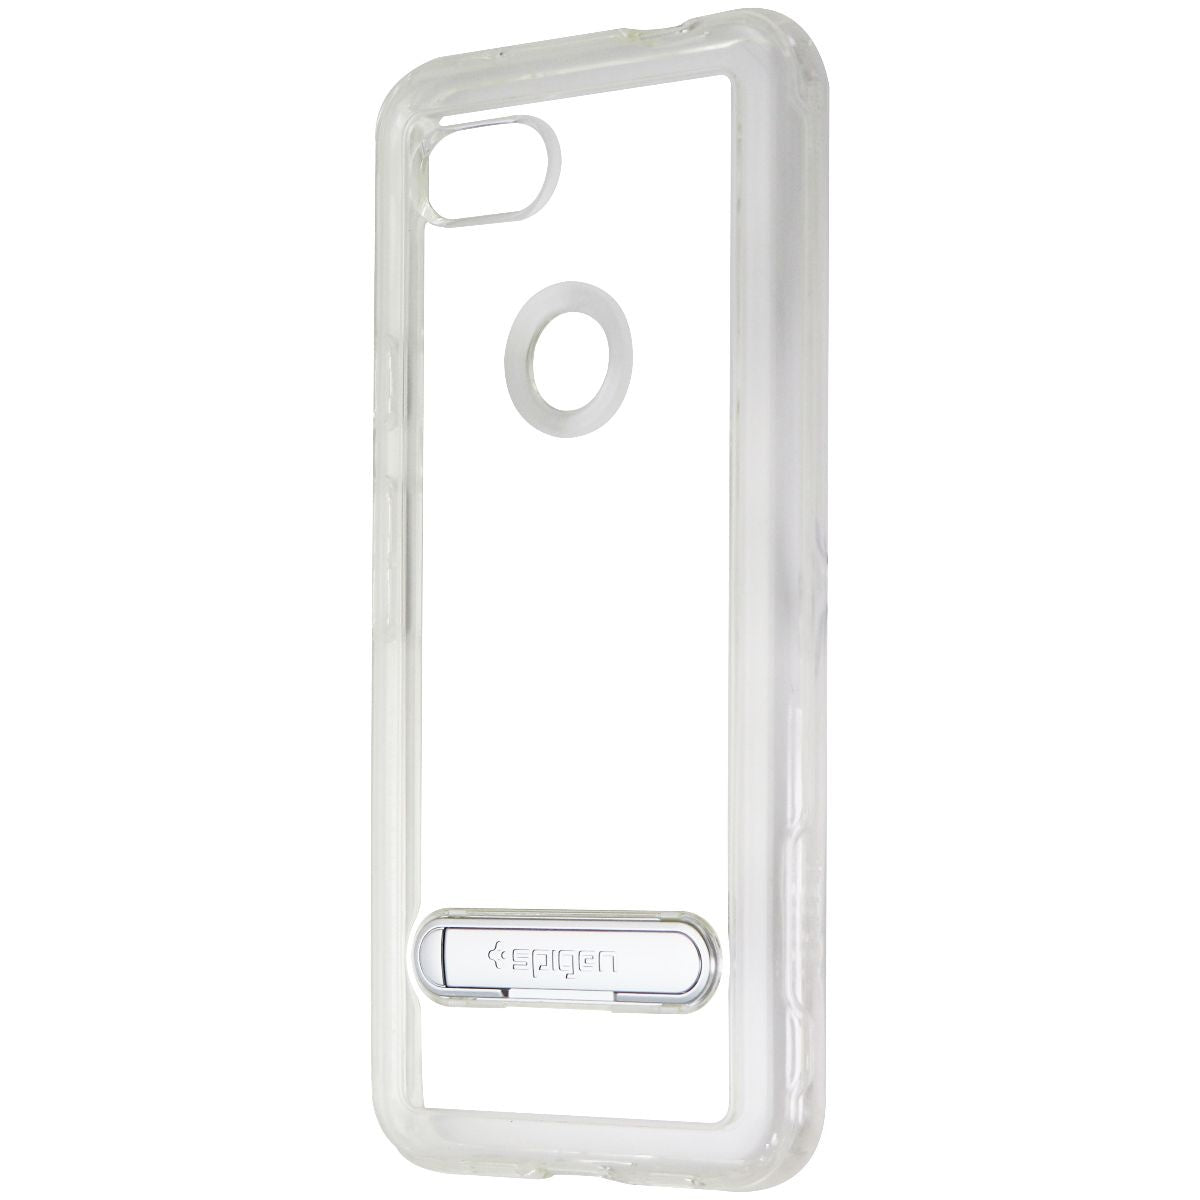 Spigen Slim Armor Crystal Series Case for Google Pixel 3a - Crystal Clear Cell Phone - Cases, Covers & Skins Spigen    - Simple Cell Bulk Wholesale Pricing - USA Seller